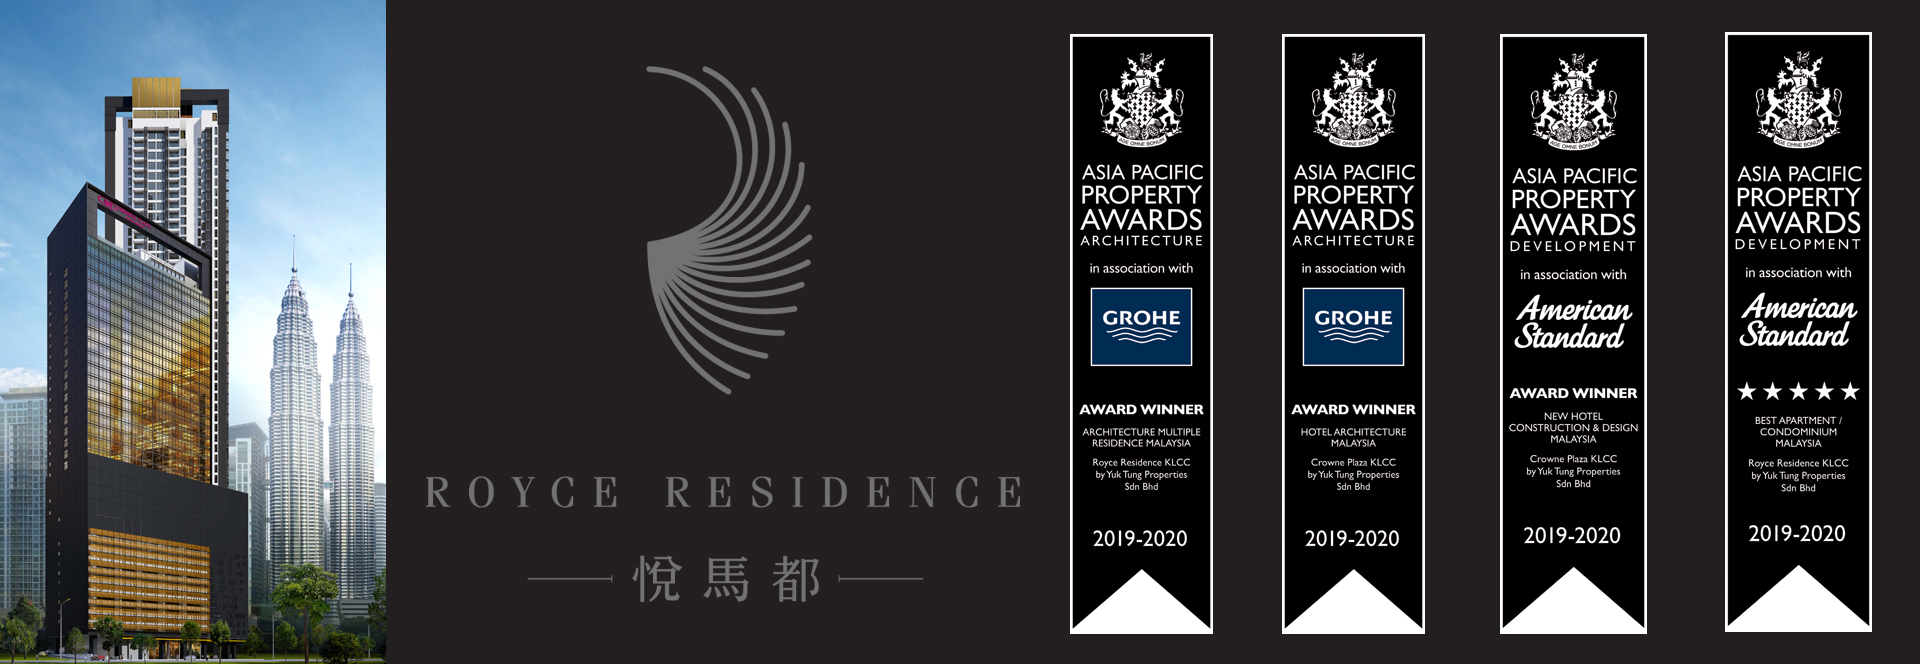 Royce_Residence_award